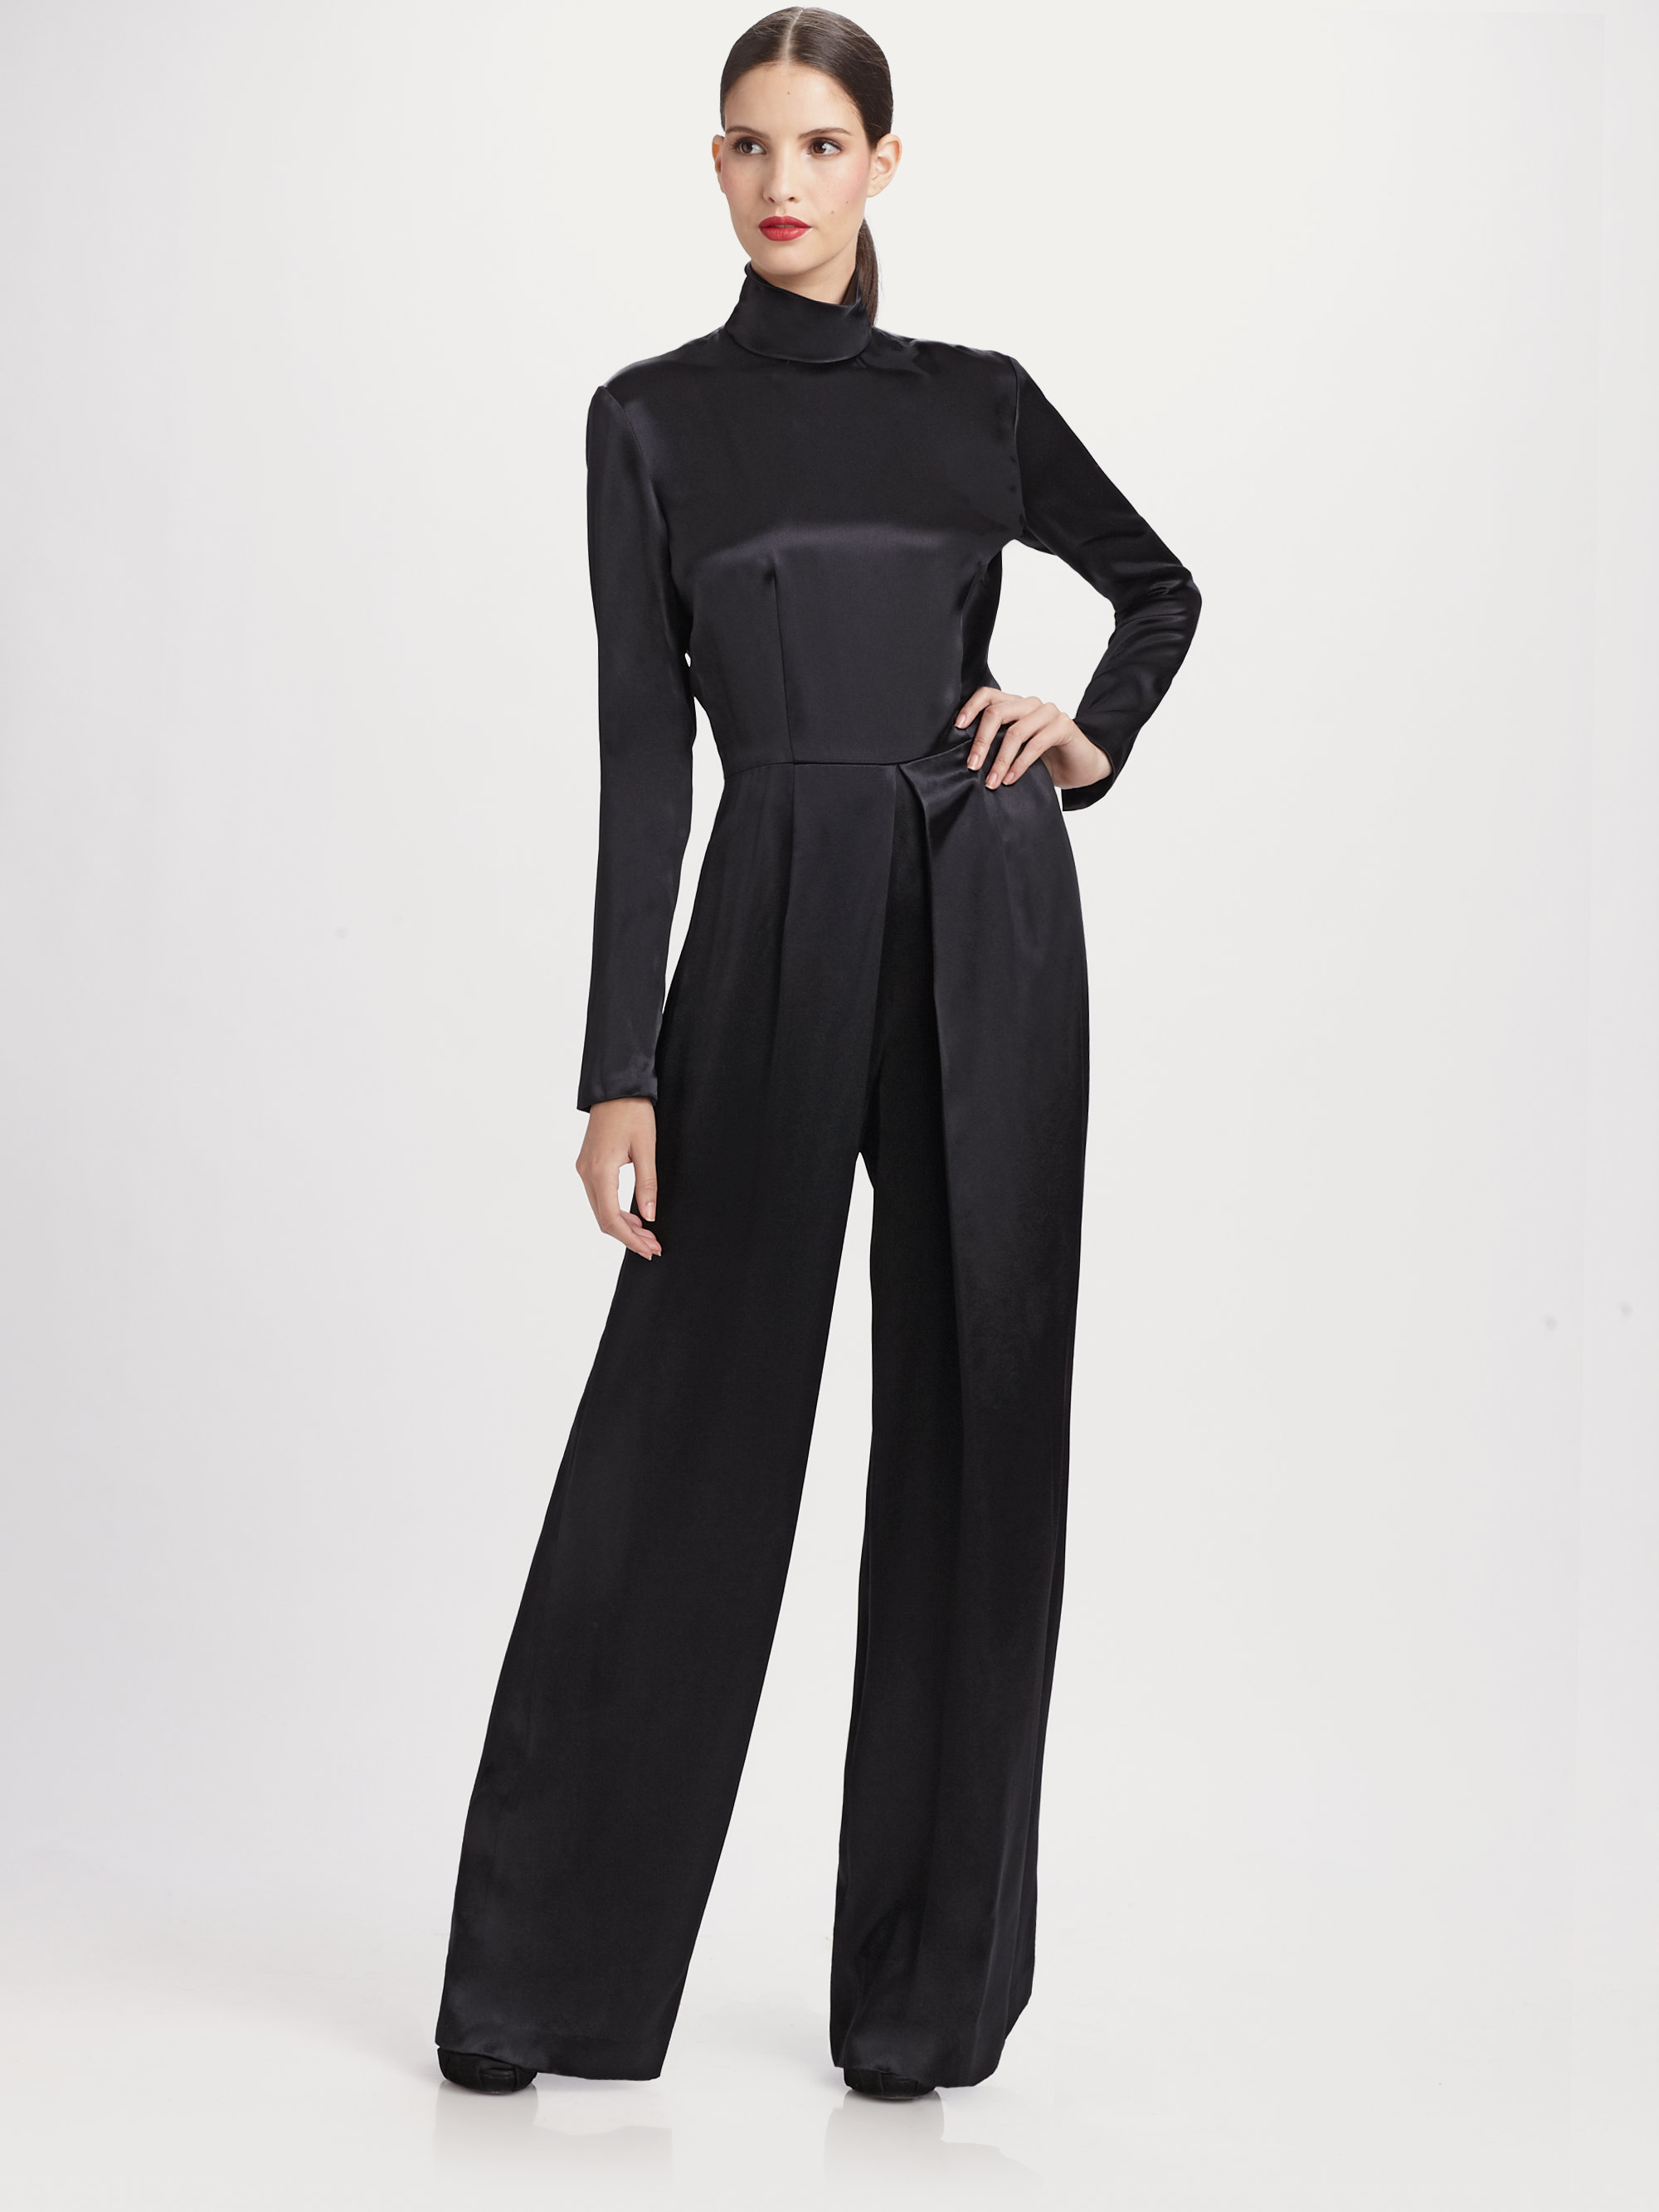 Lyst - Ralph Lauren Collection Satin Vivian Jumpsuit in Black